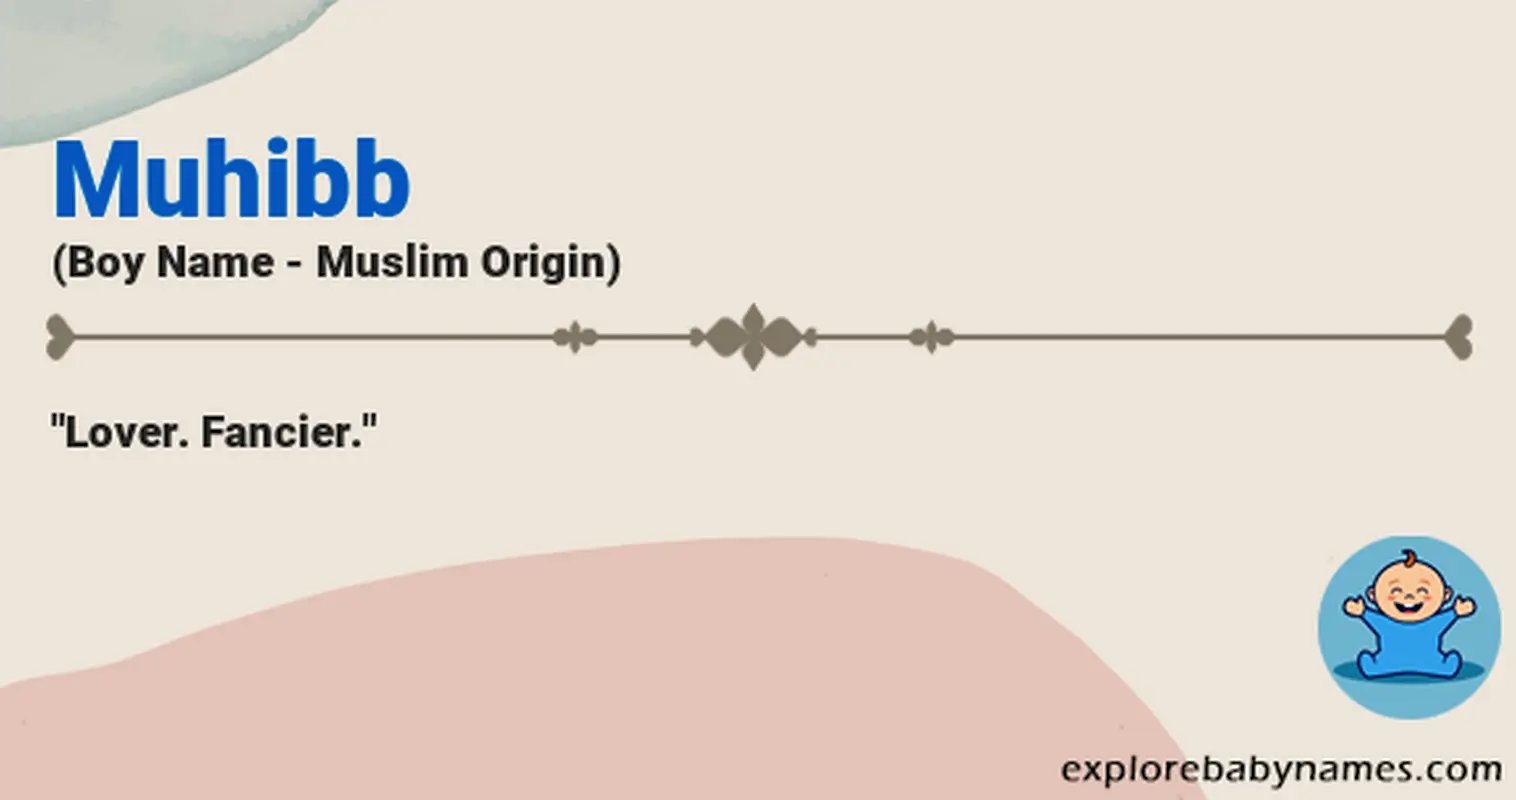 Meaning of Muhibb